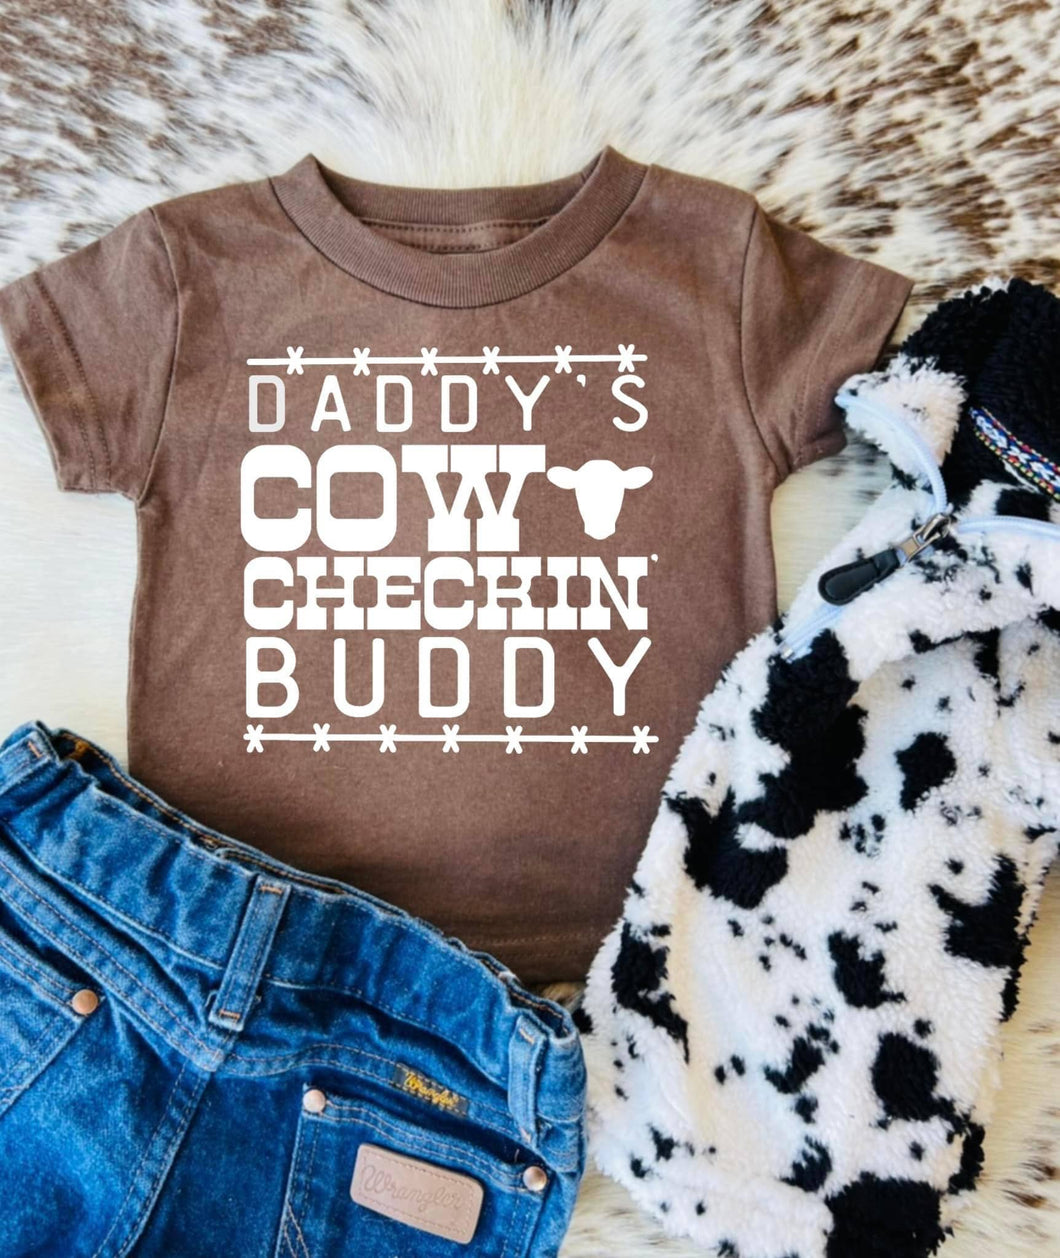 Daddy’s cattle checkin buddy